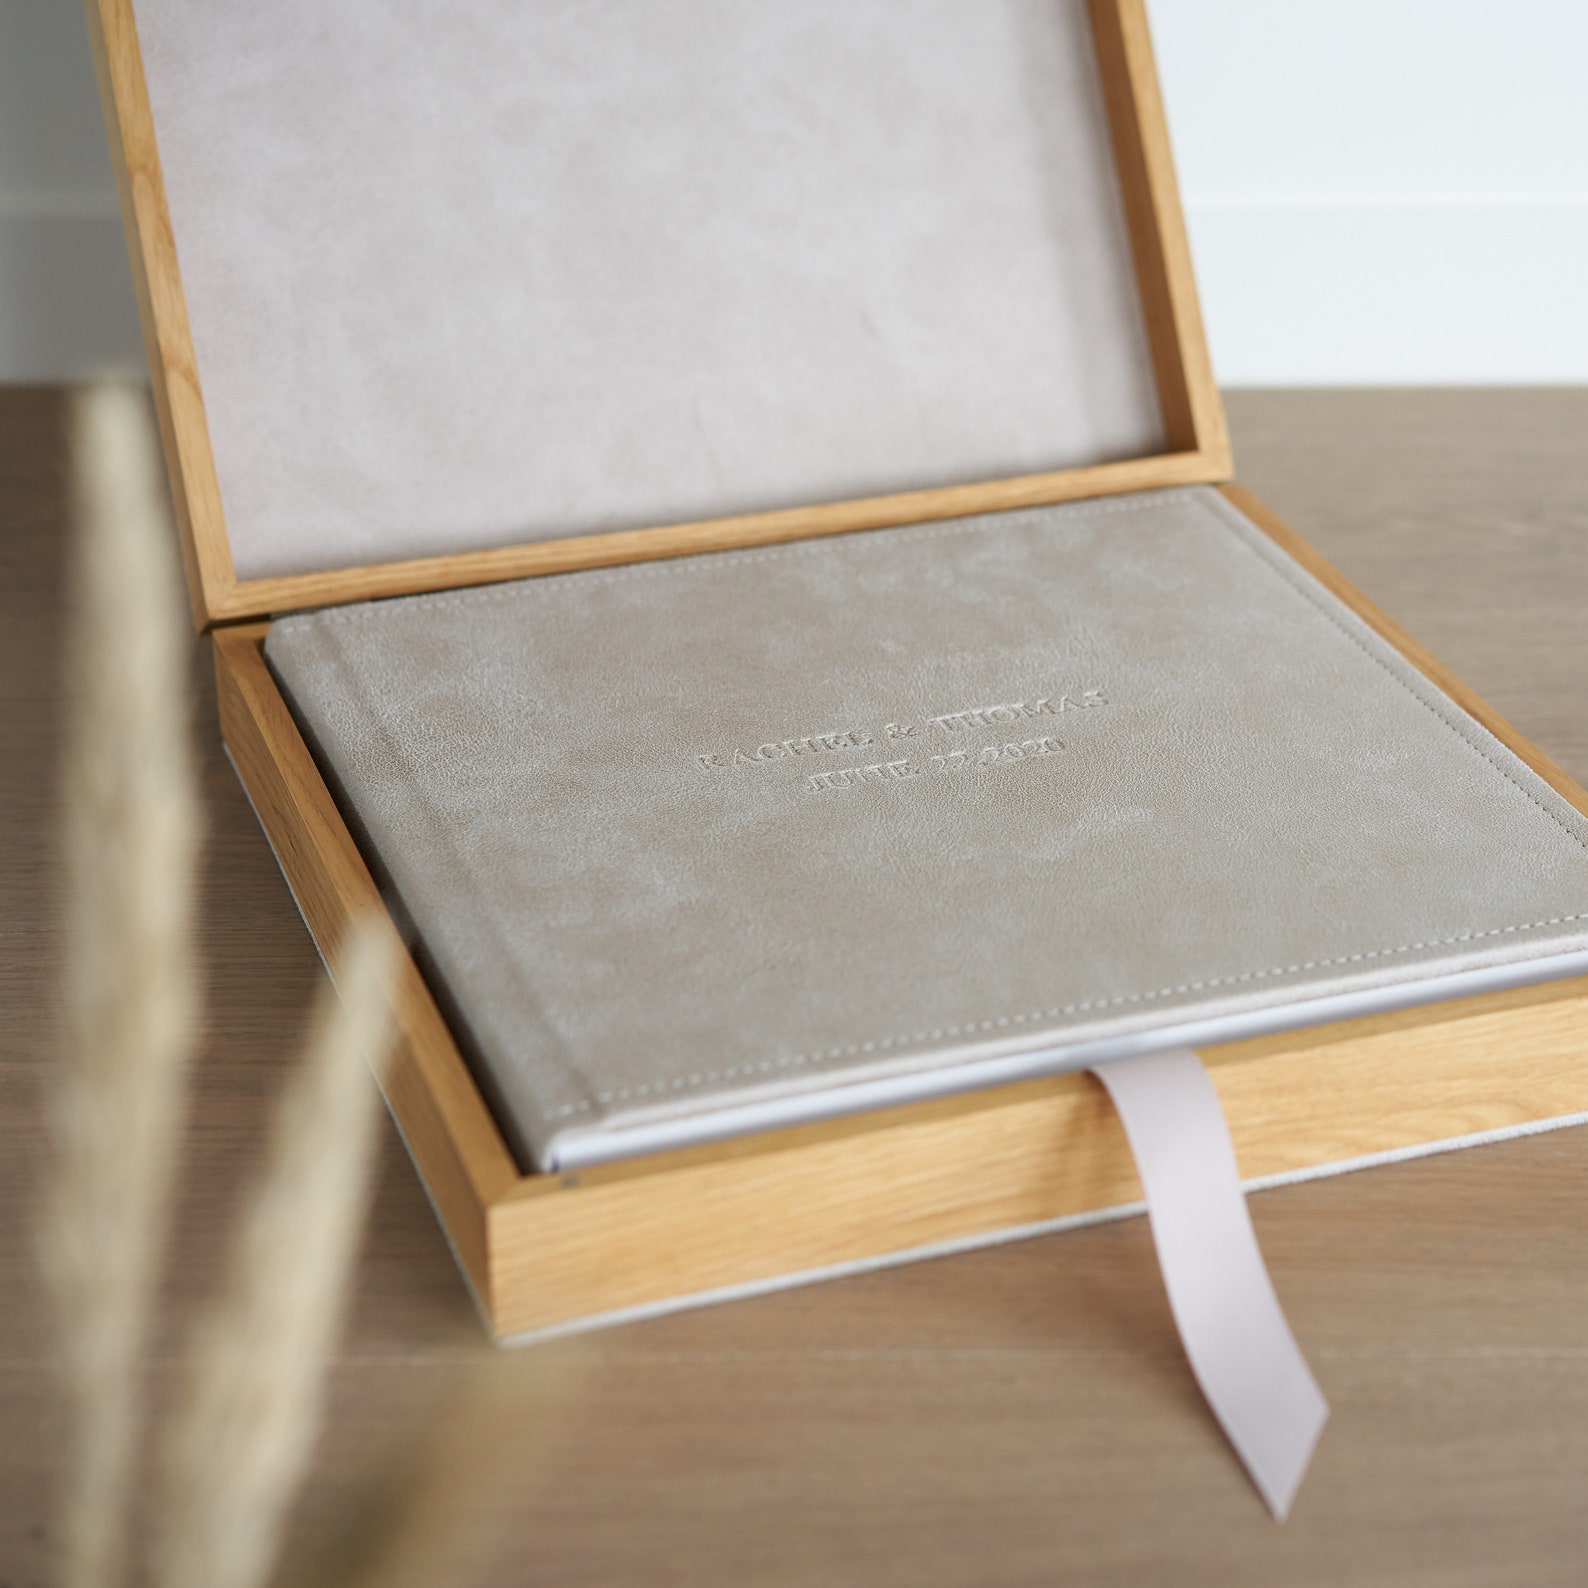 Wooden Clamshell Box Natural Oak Photo Album Box Luxury - Etsy